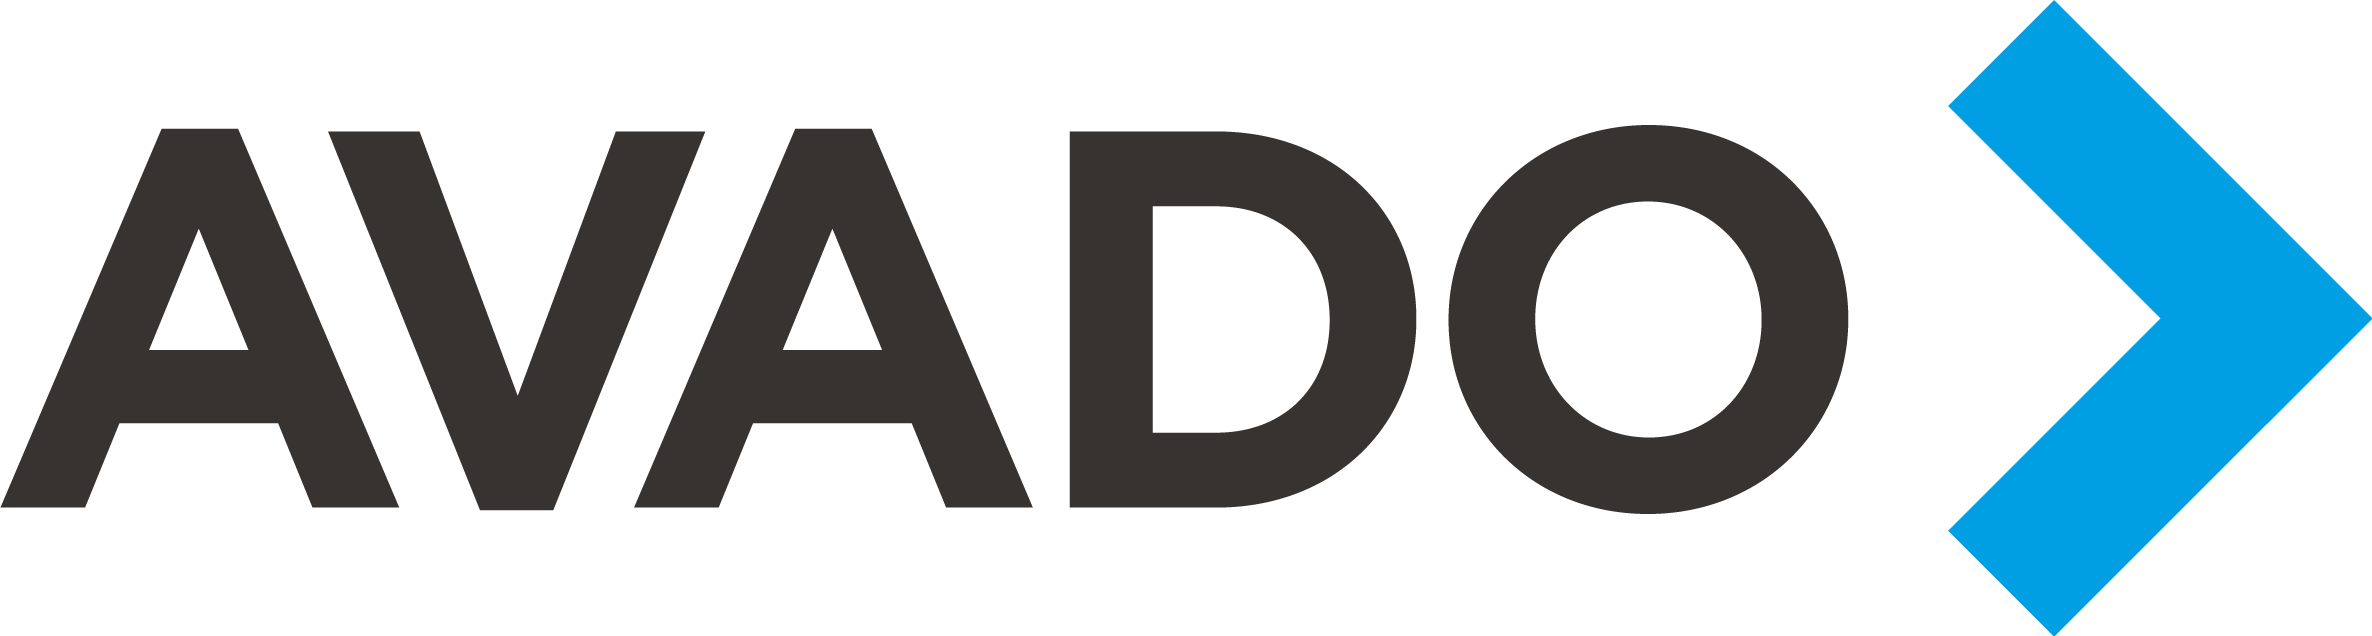 2017 Aat Salary And Career Survey - Avado Logo (2372x636), Png Download